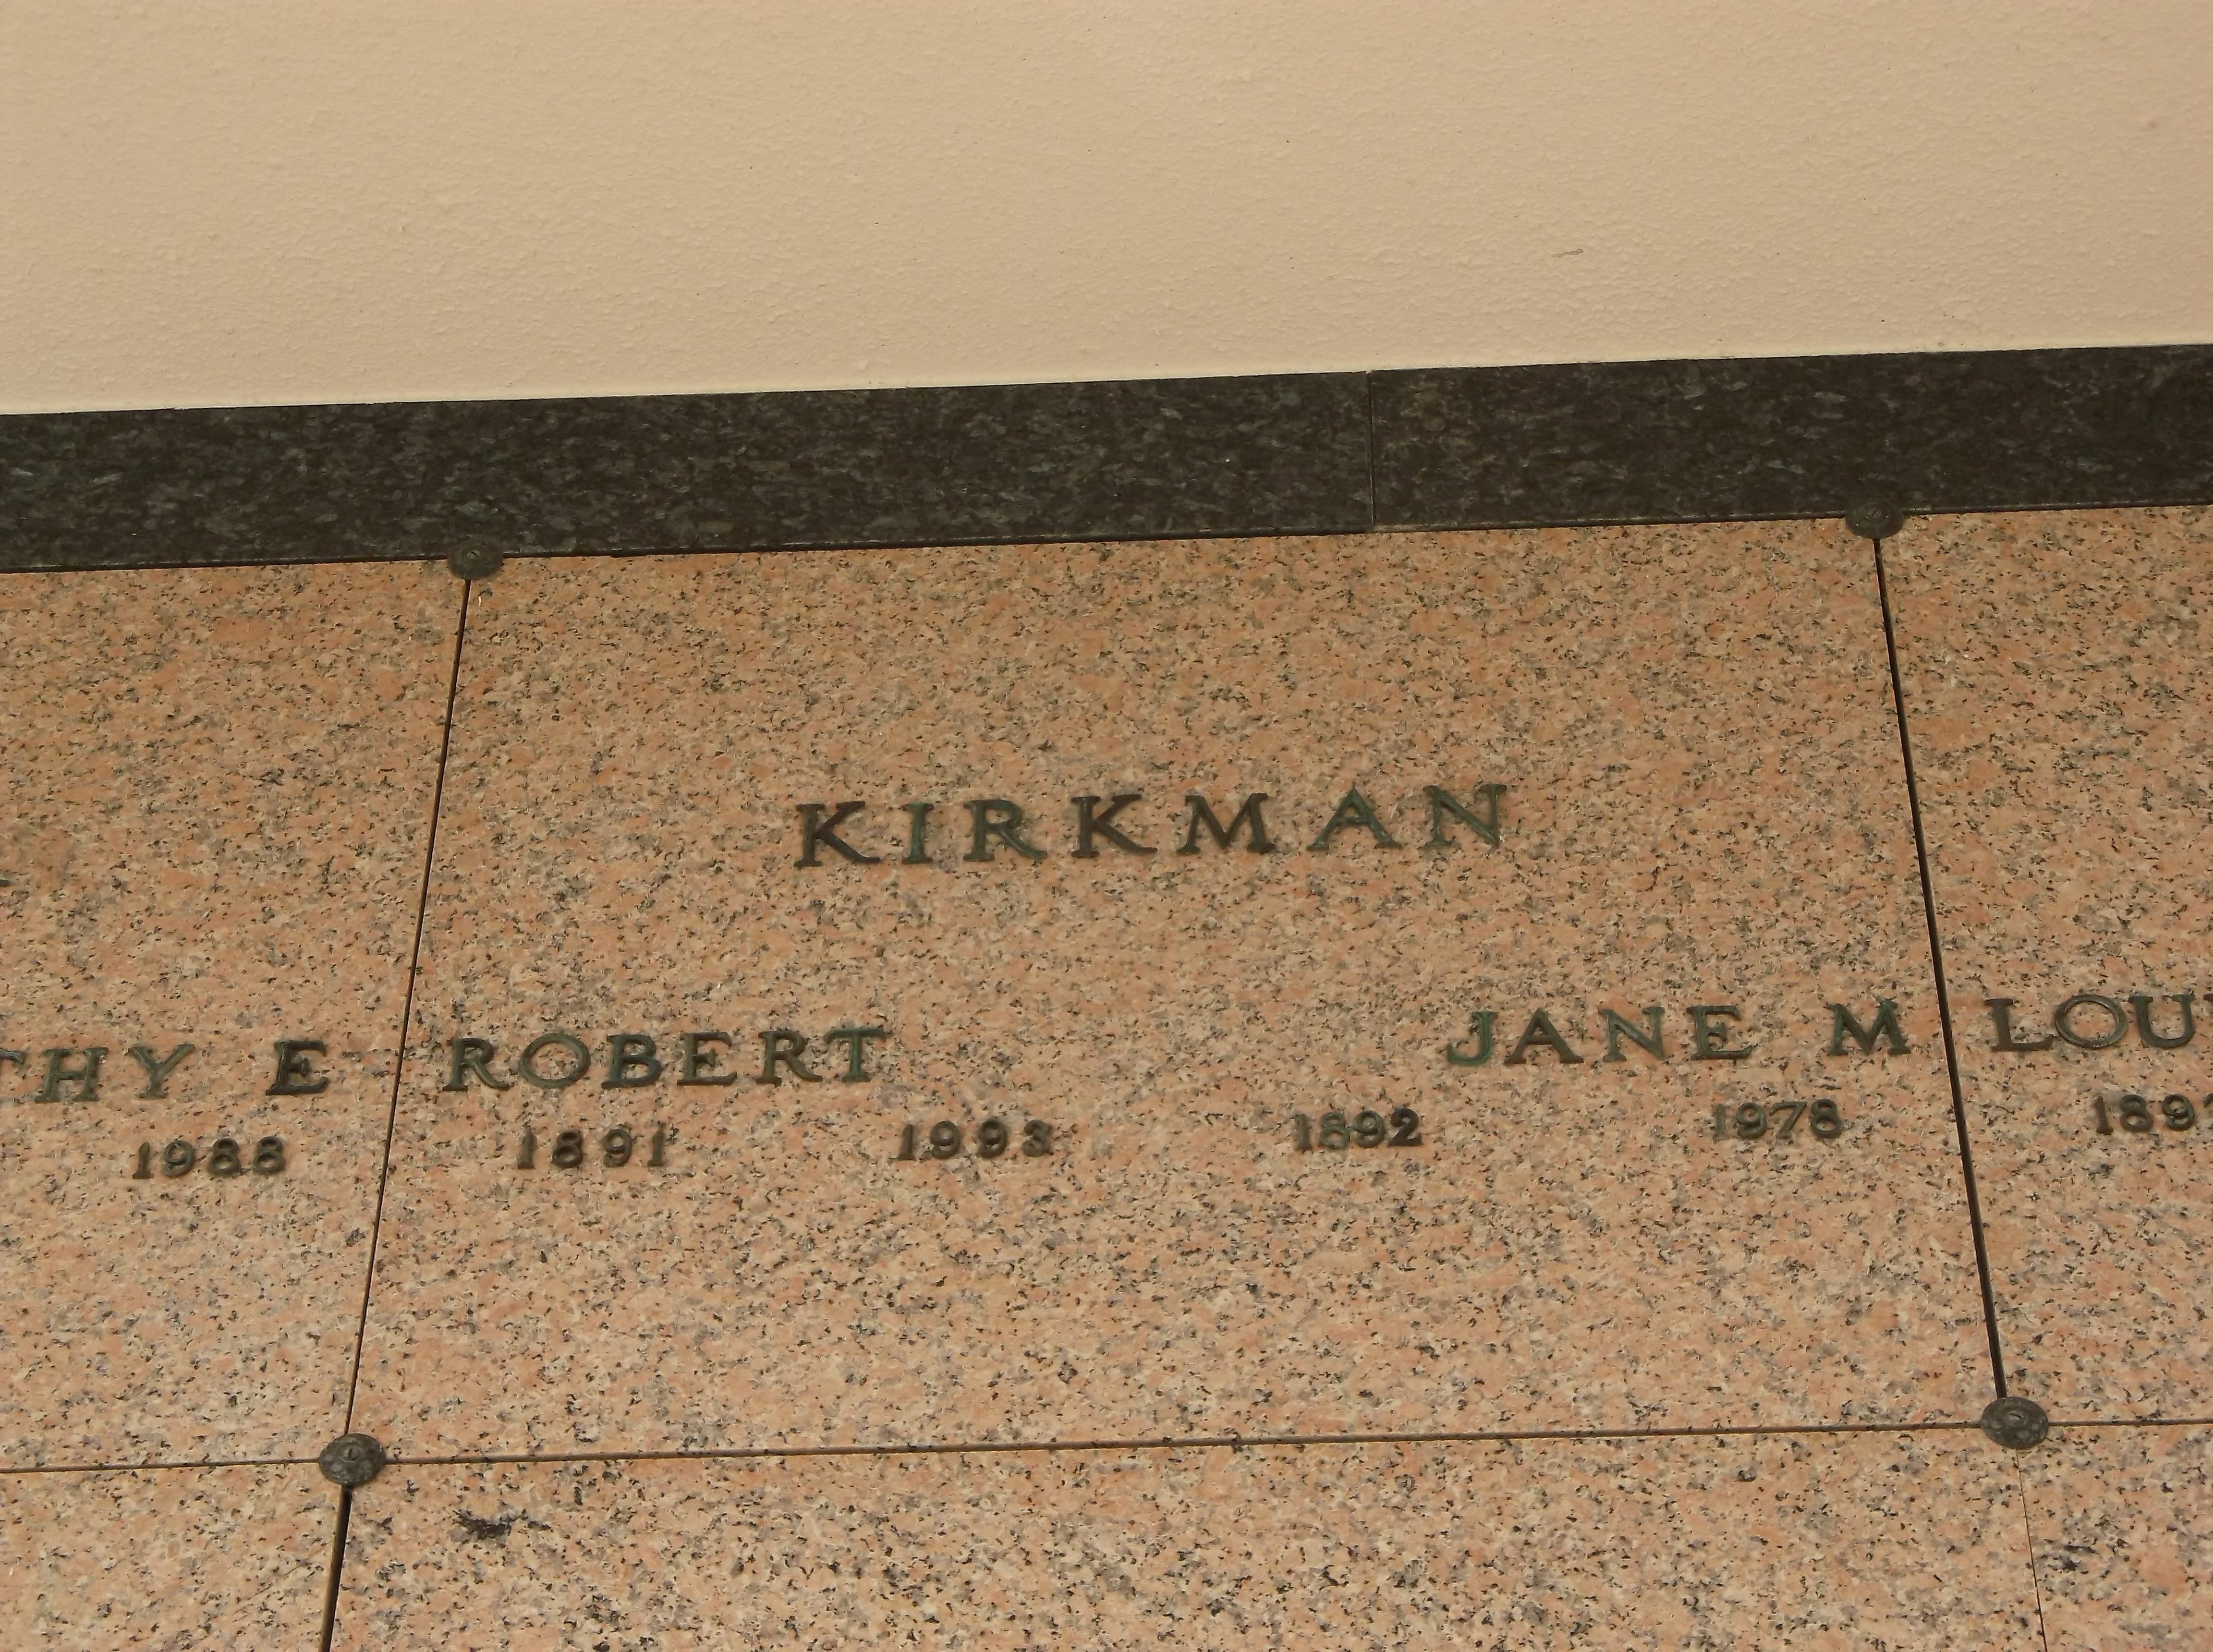 Jane M Kirkman